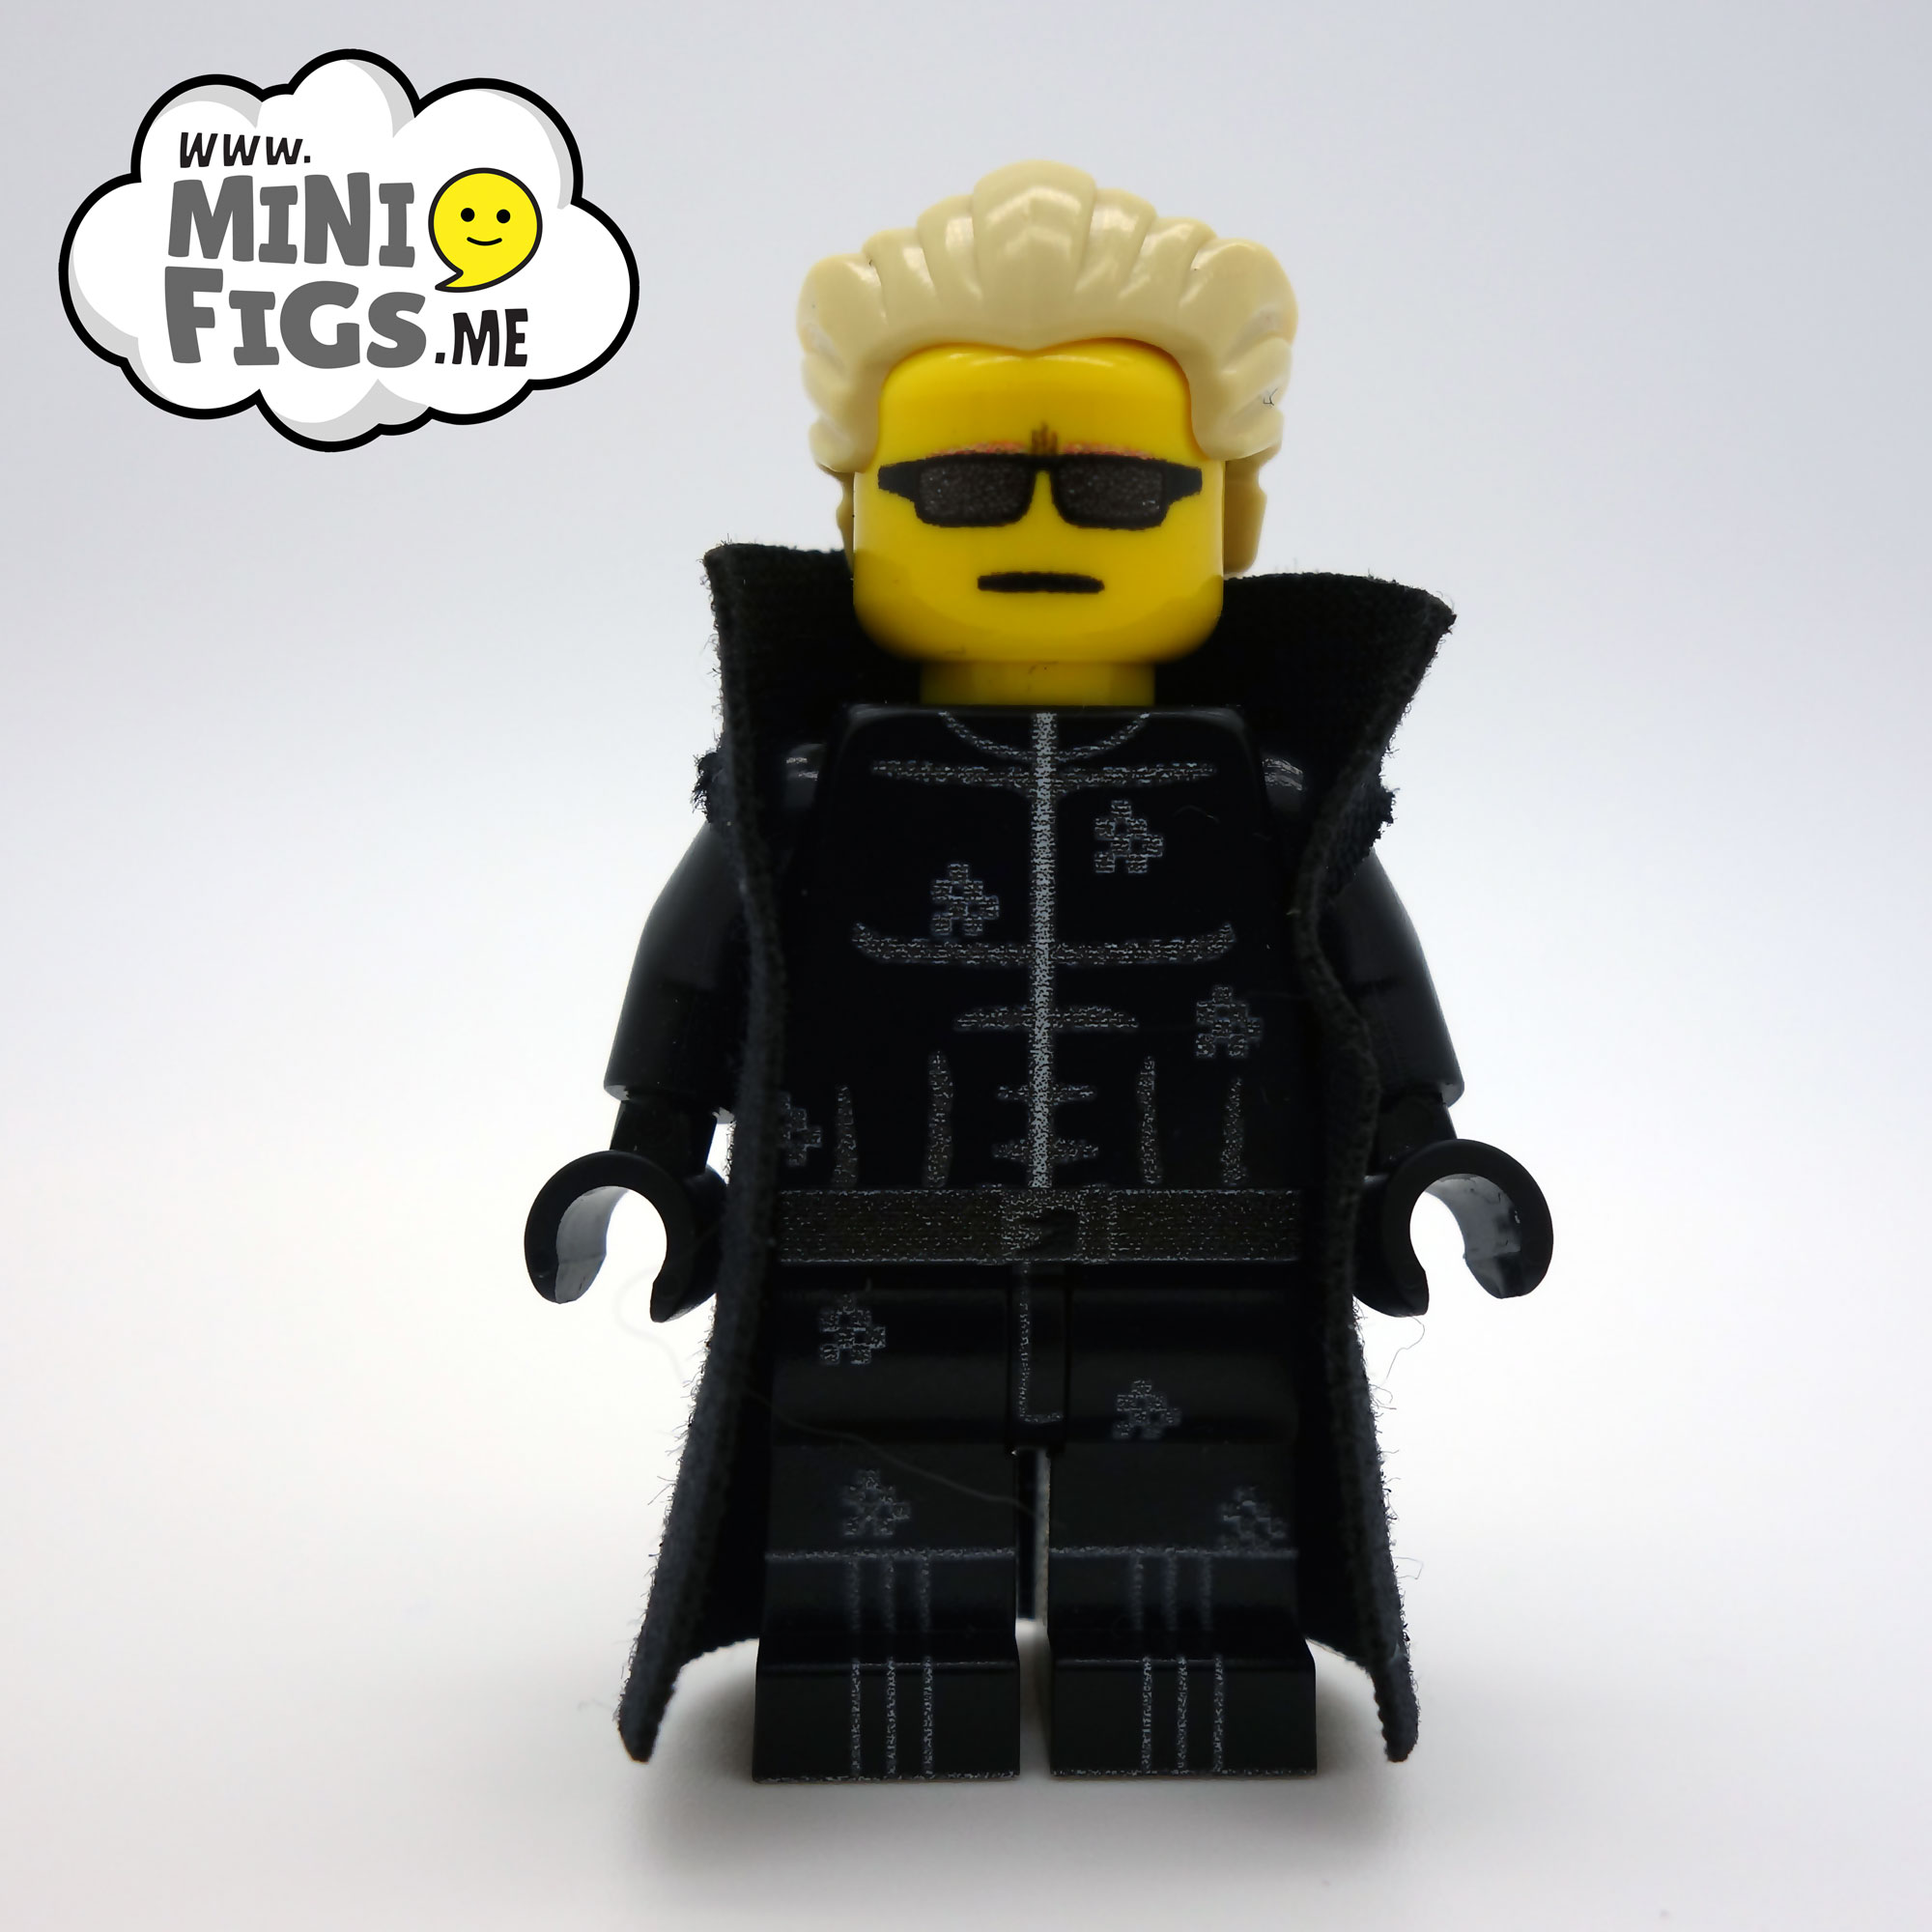 Lego, arrivano i personaggi ispirati ai videogame